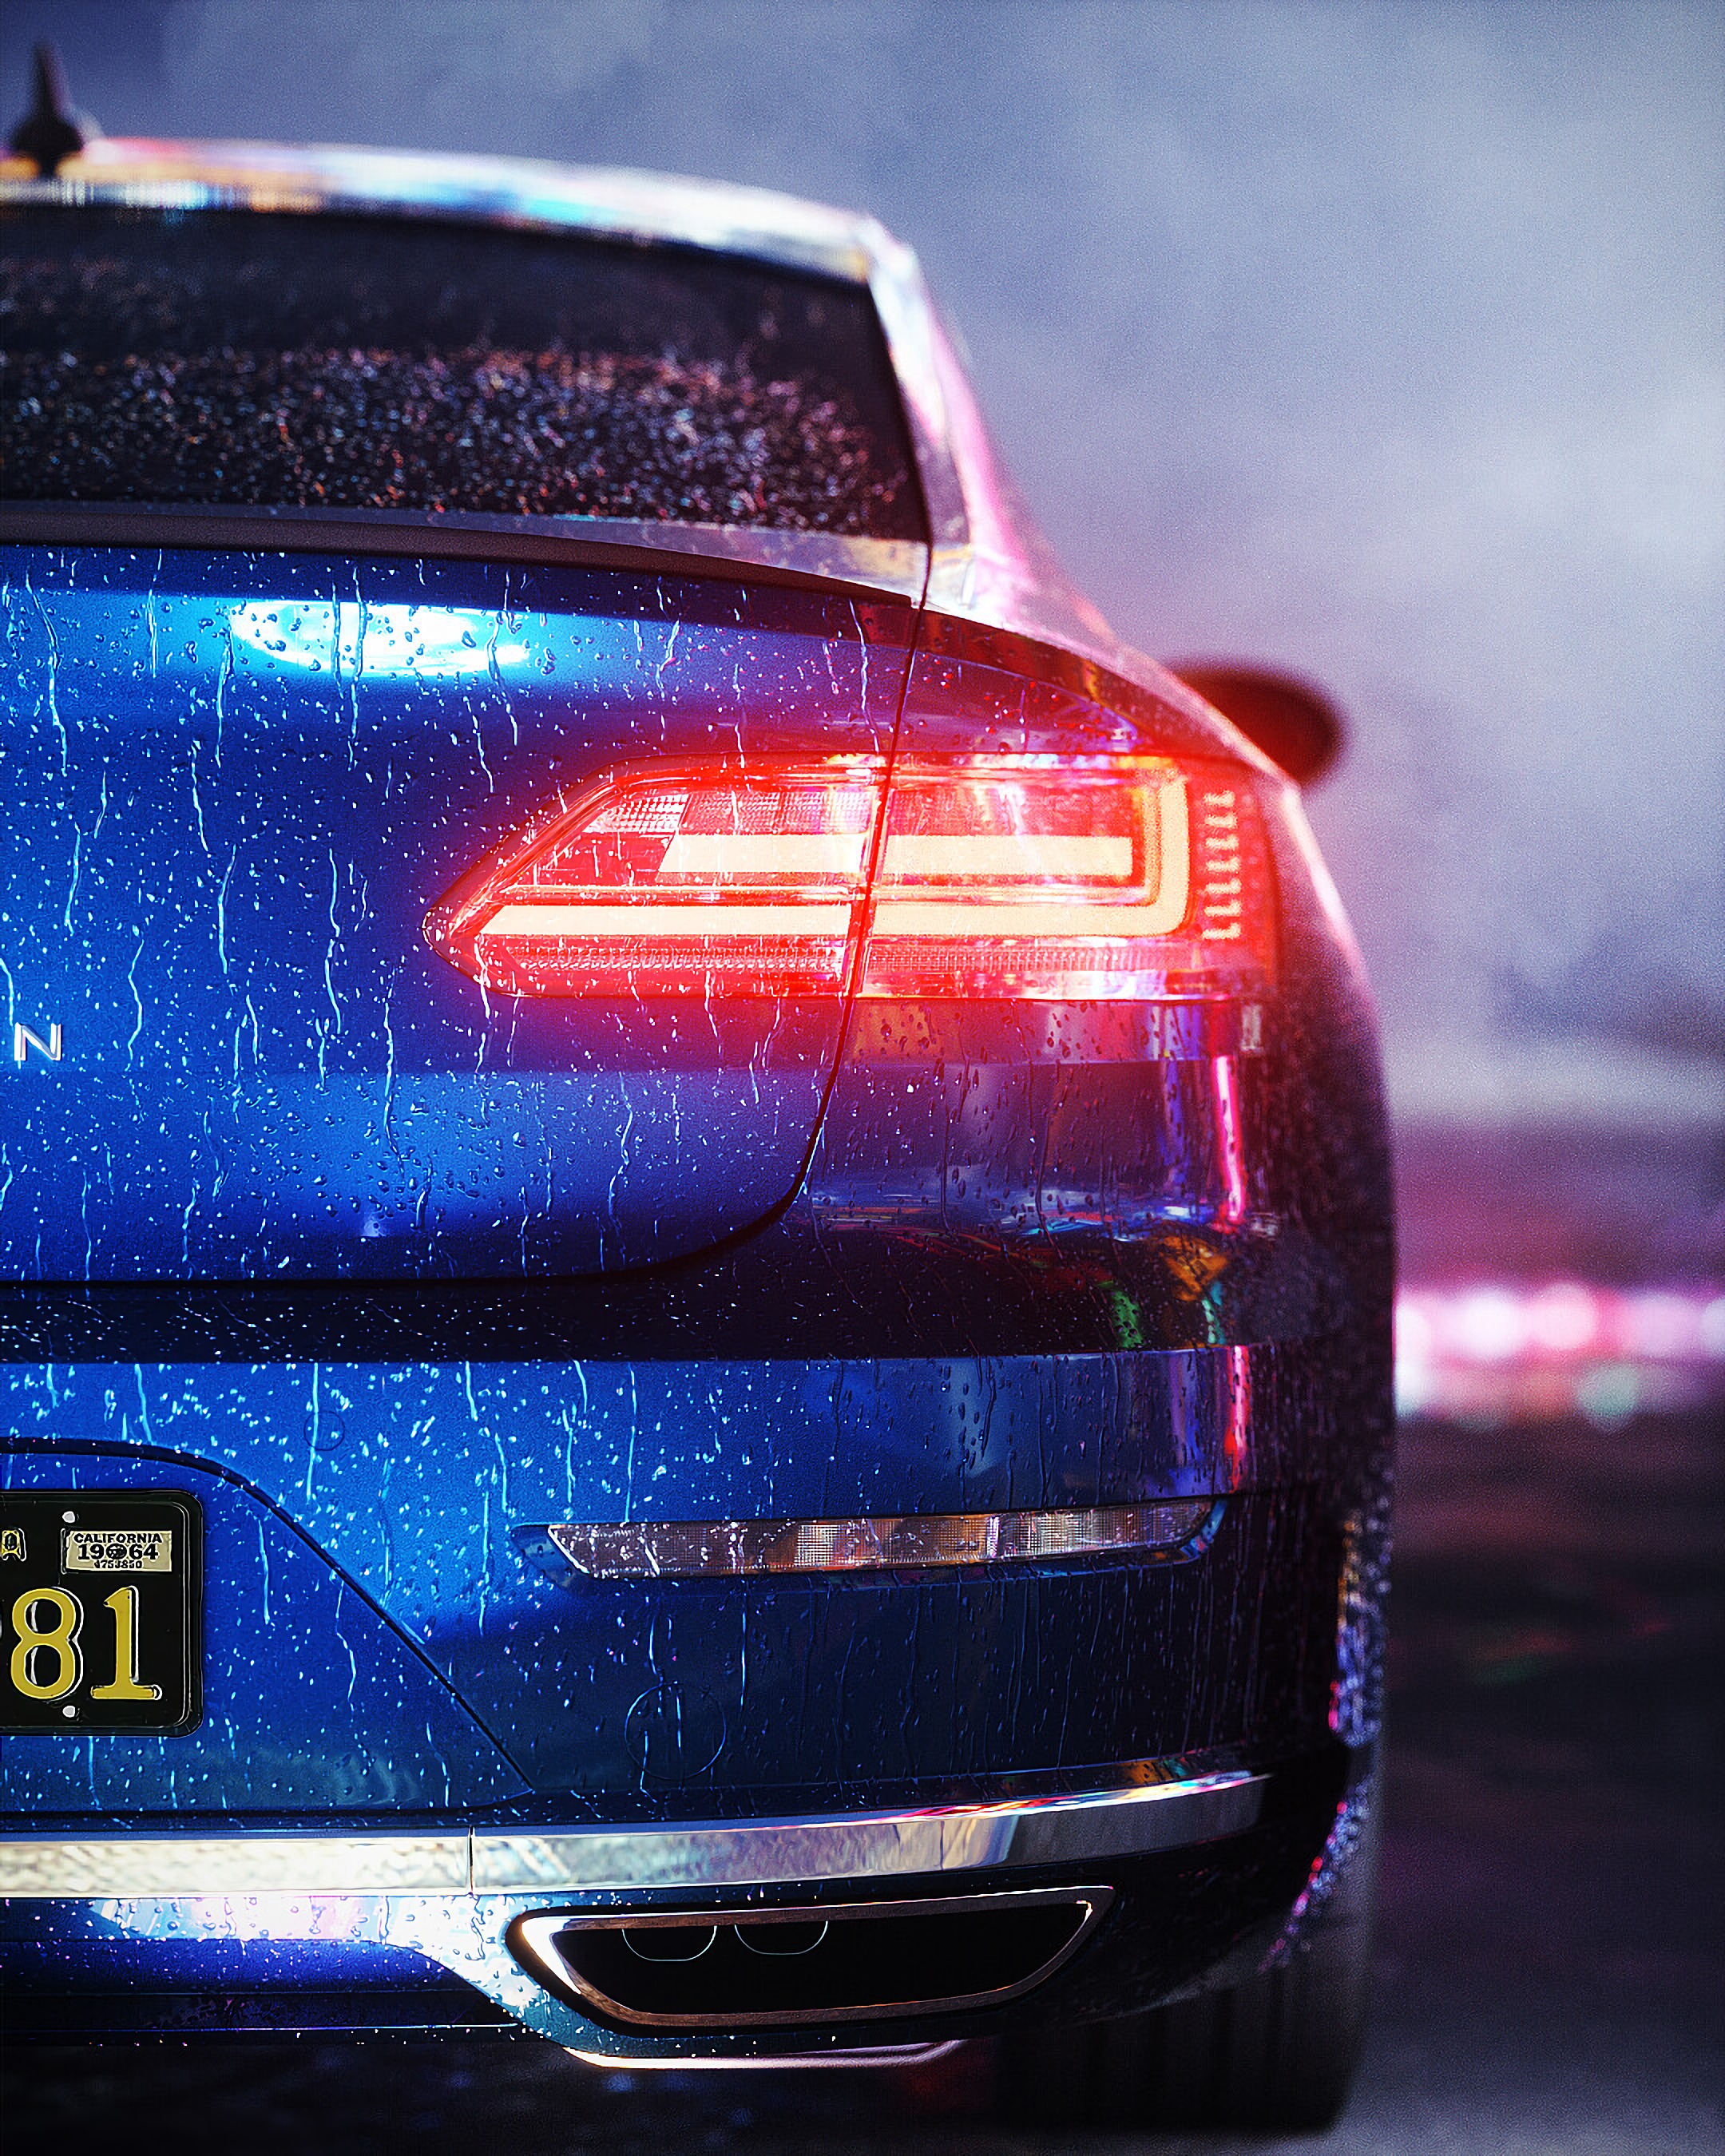 back view, car, backlight, light, blue, cars, shine, wet, machine, illumination, rear view wallpaper for mobile